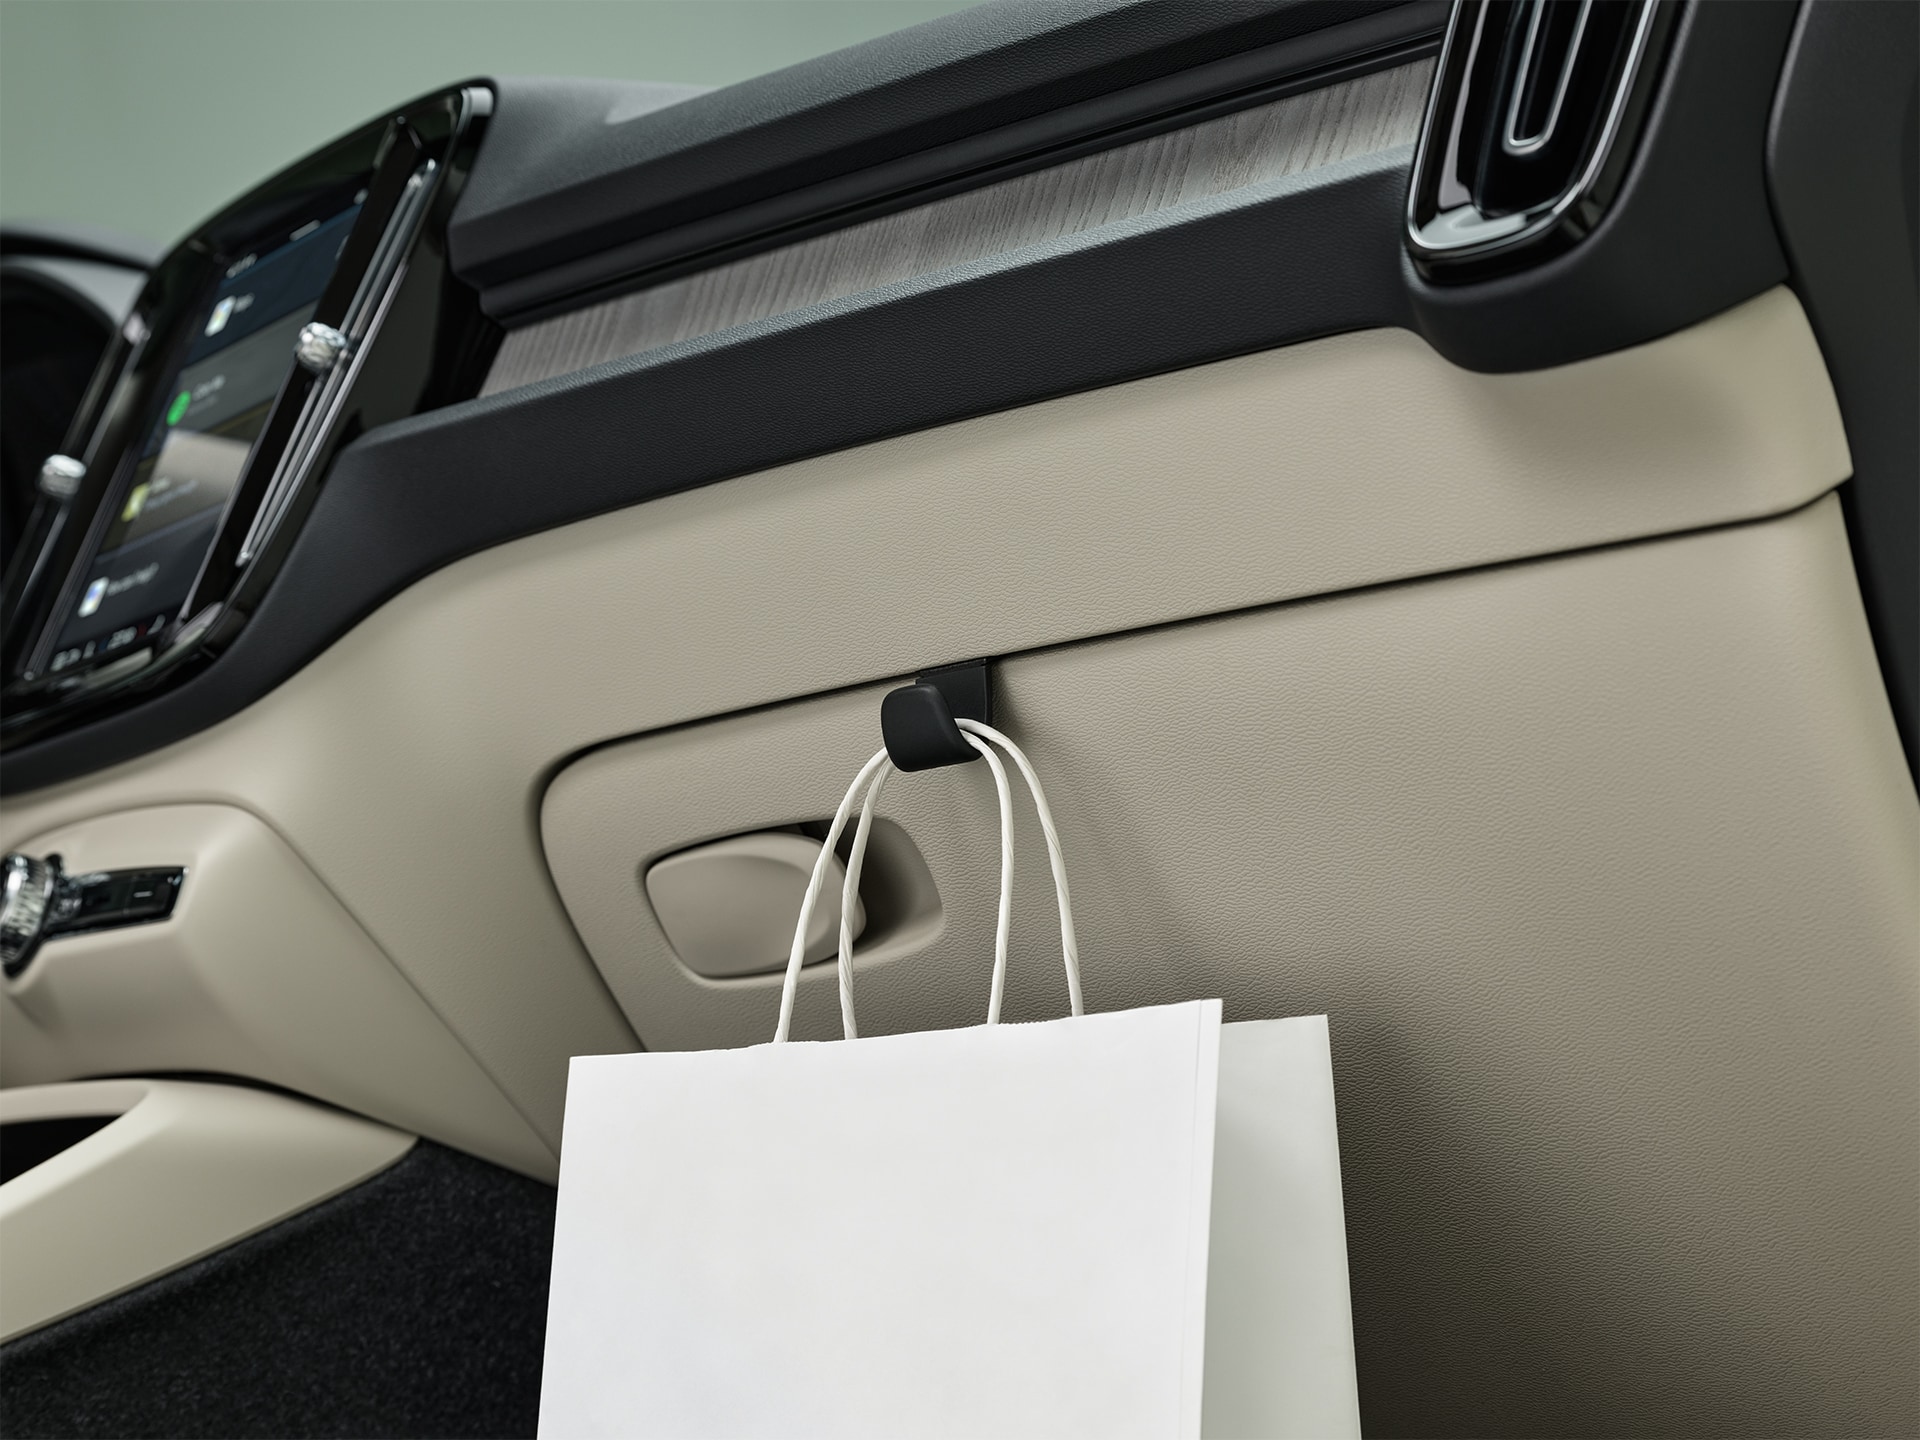 Smart interior storage solutions in a Volvo XC40 SUV.